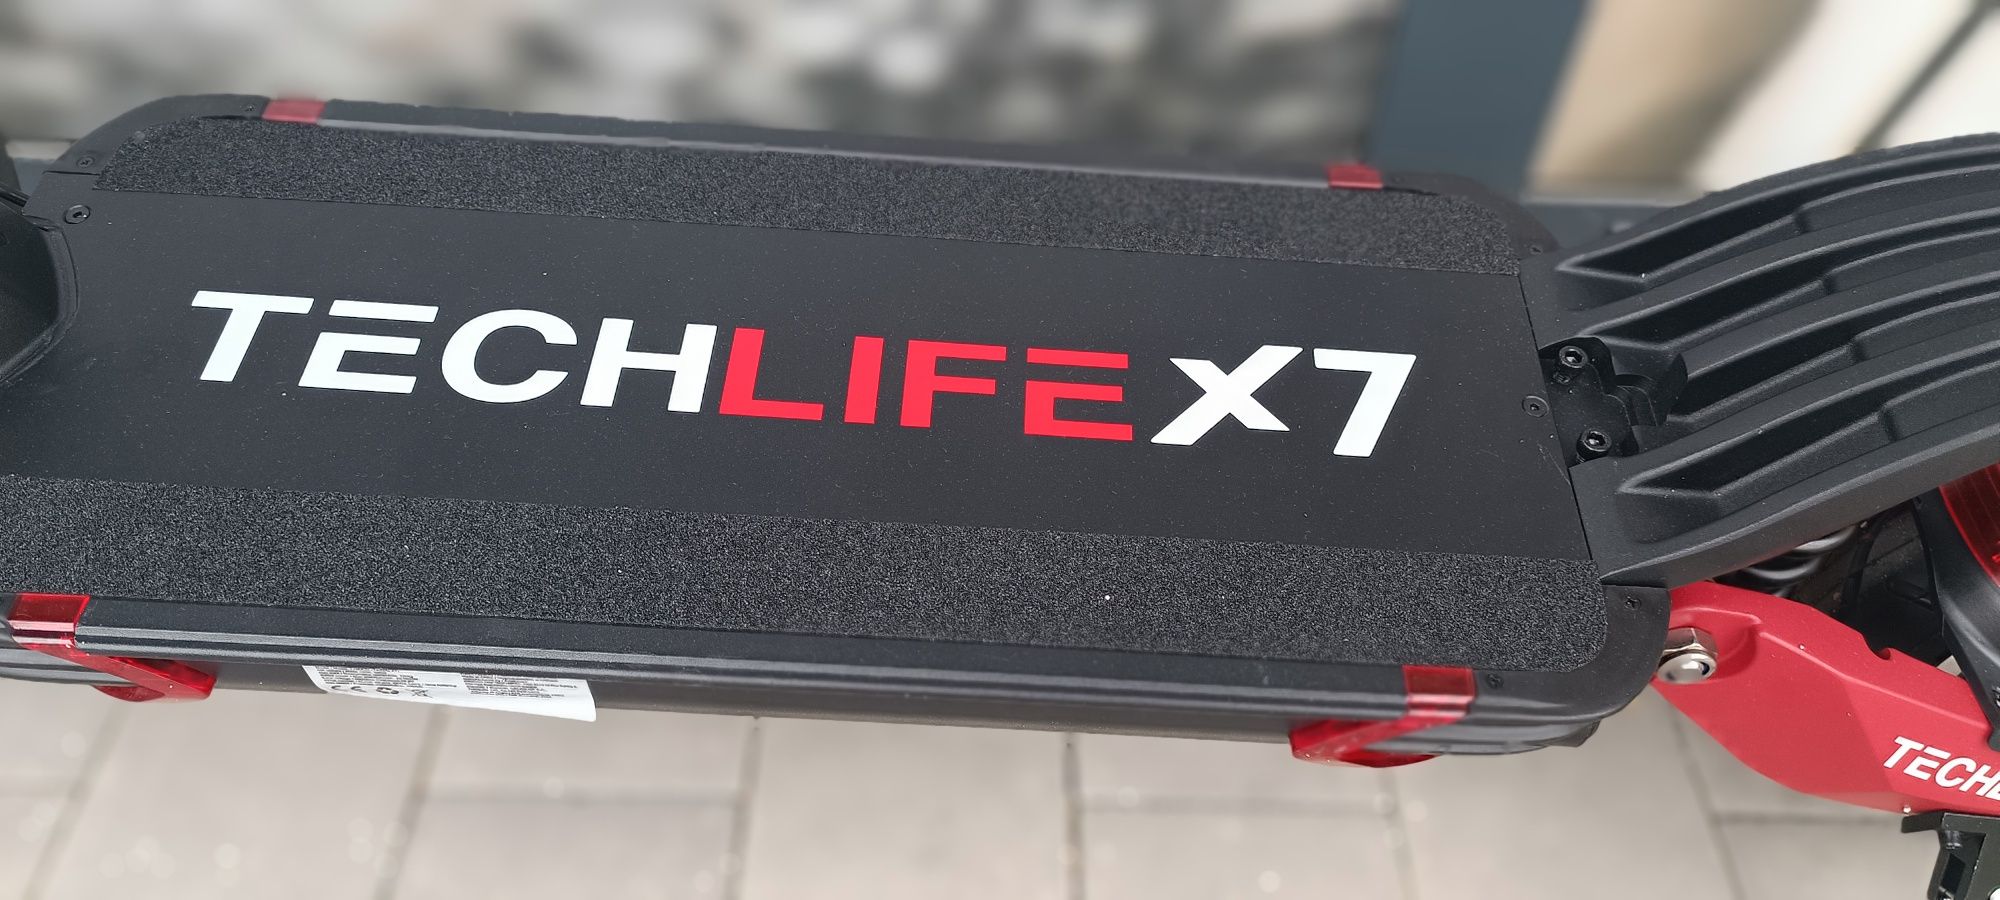 Techlife x7 hulajnoga elektryczna  super cena